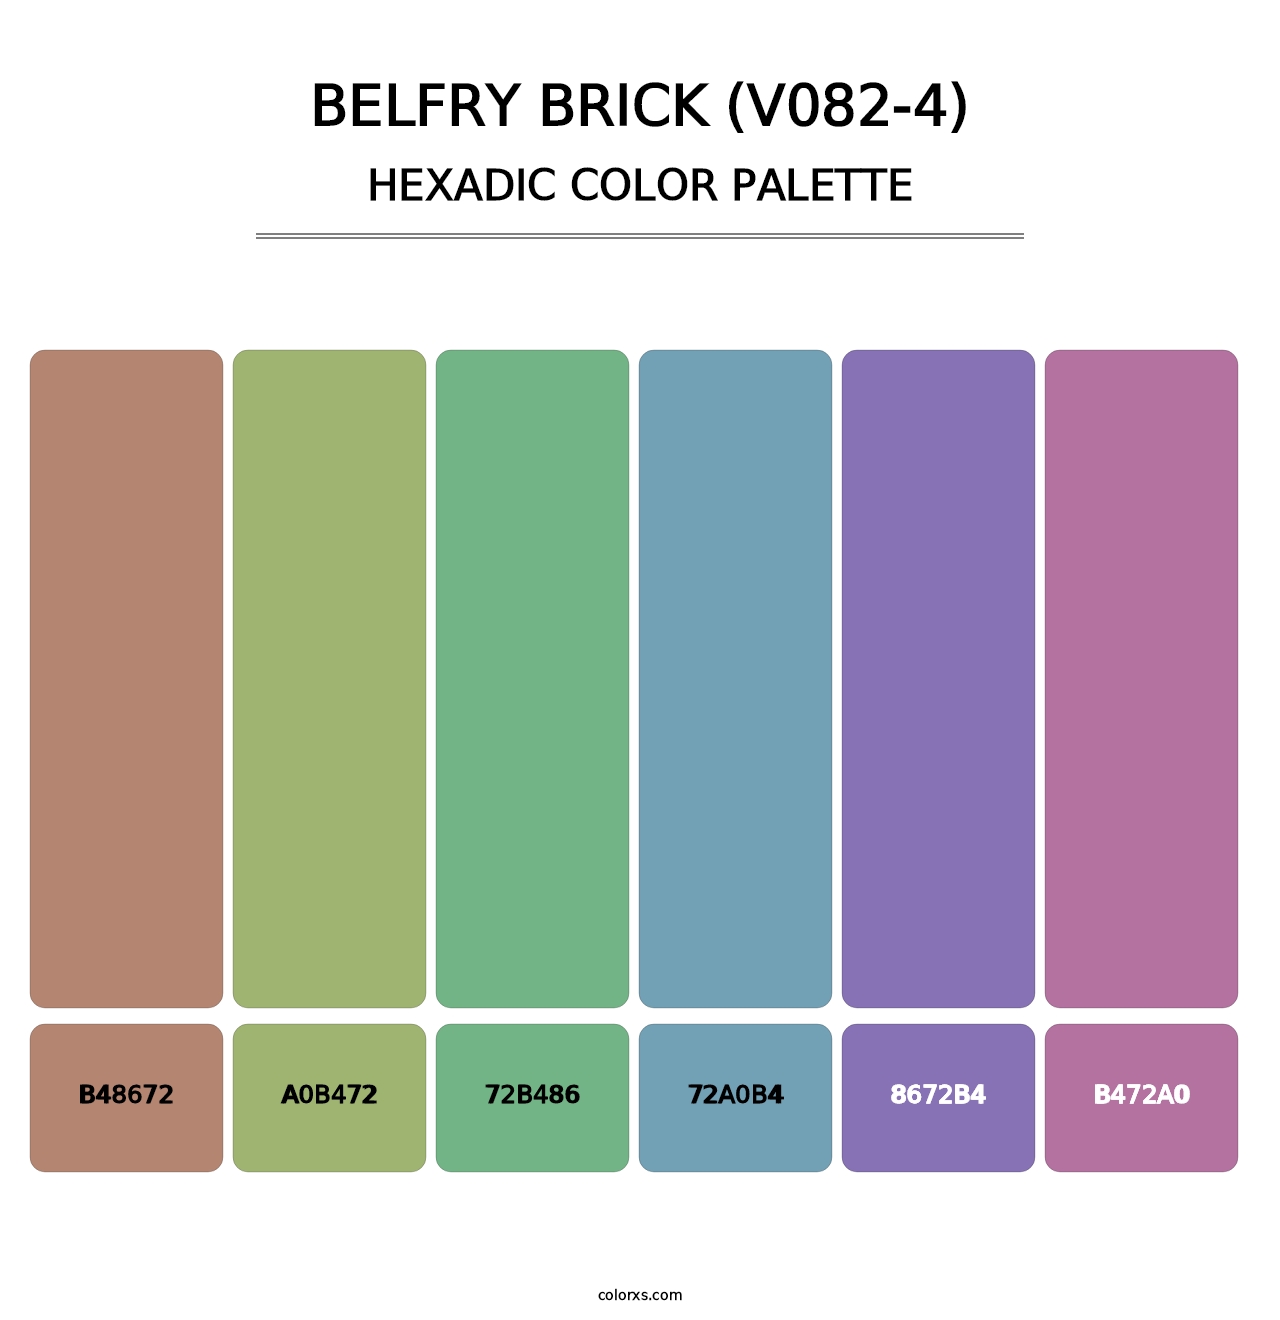 Belfry Brick (V082-4) - Hexadic Color Palette